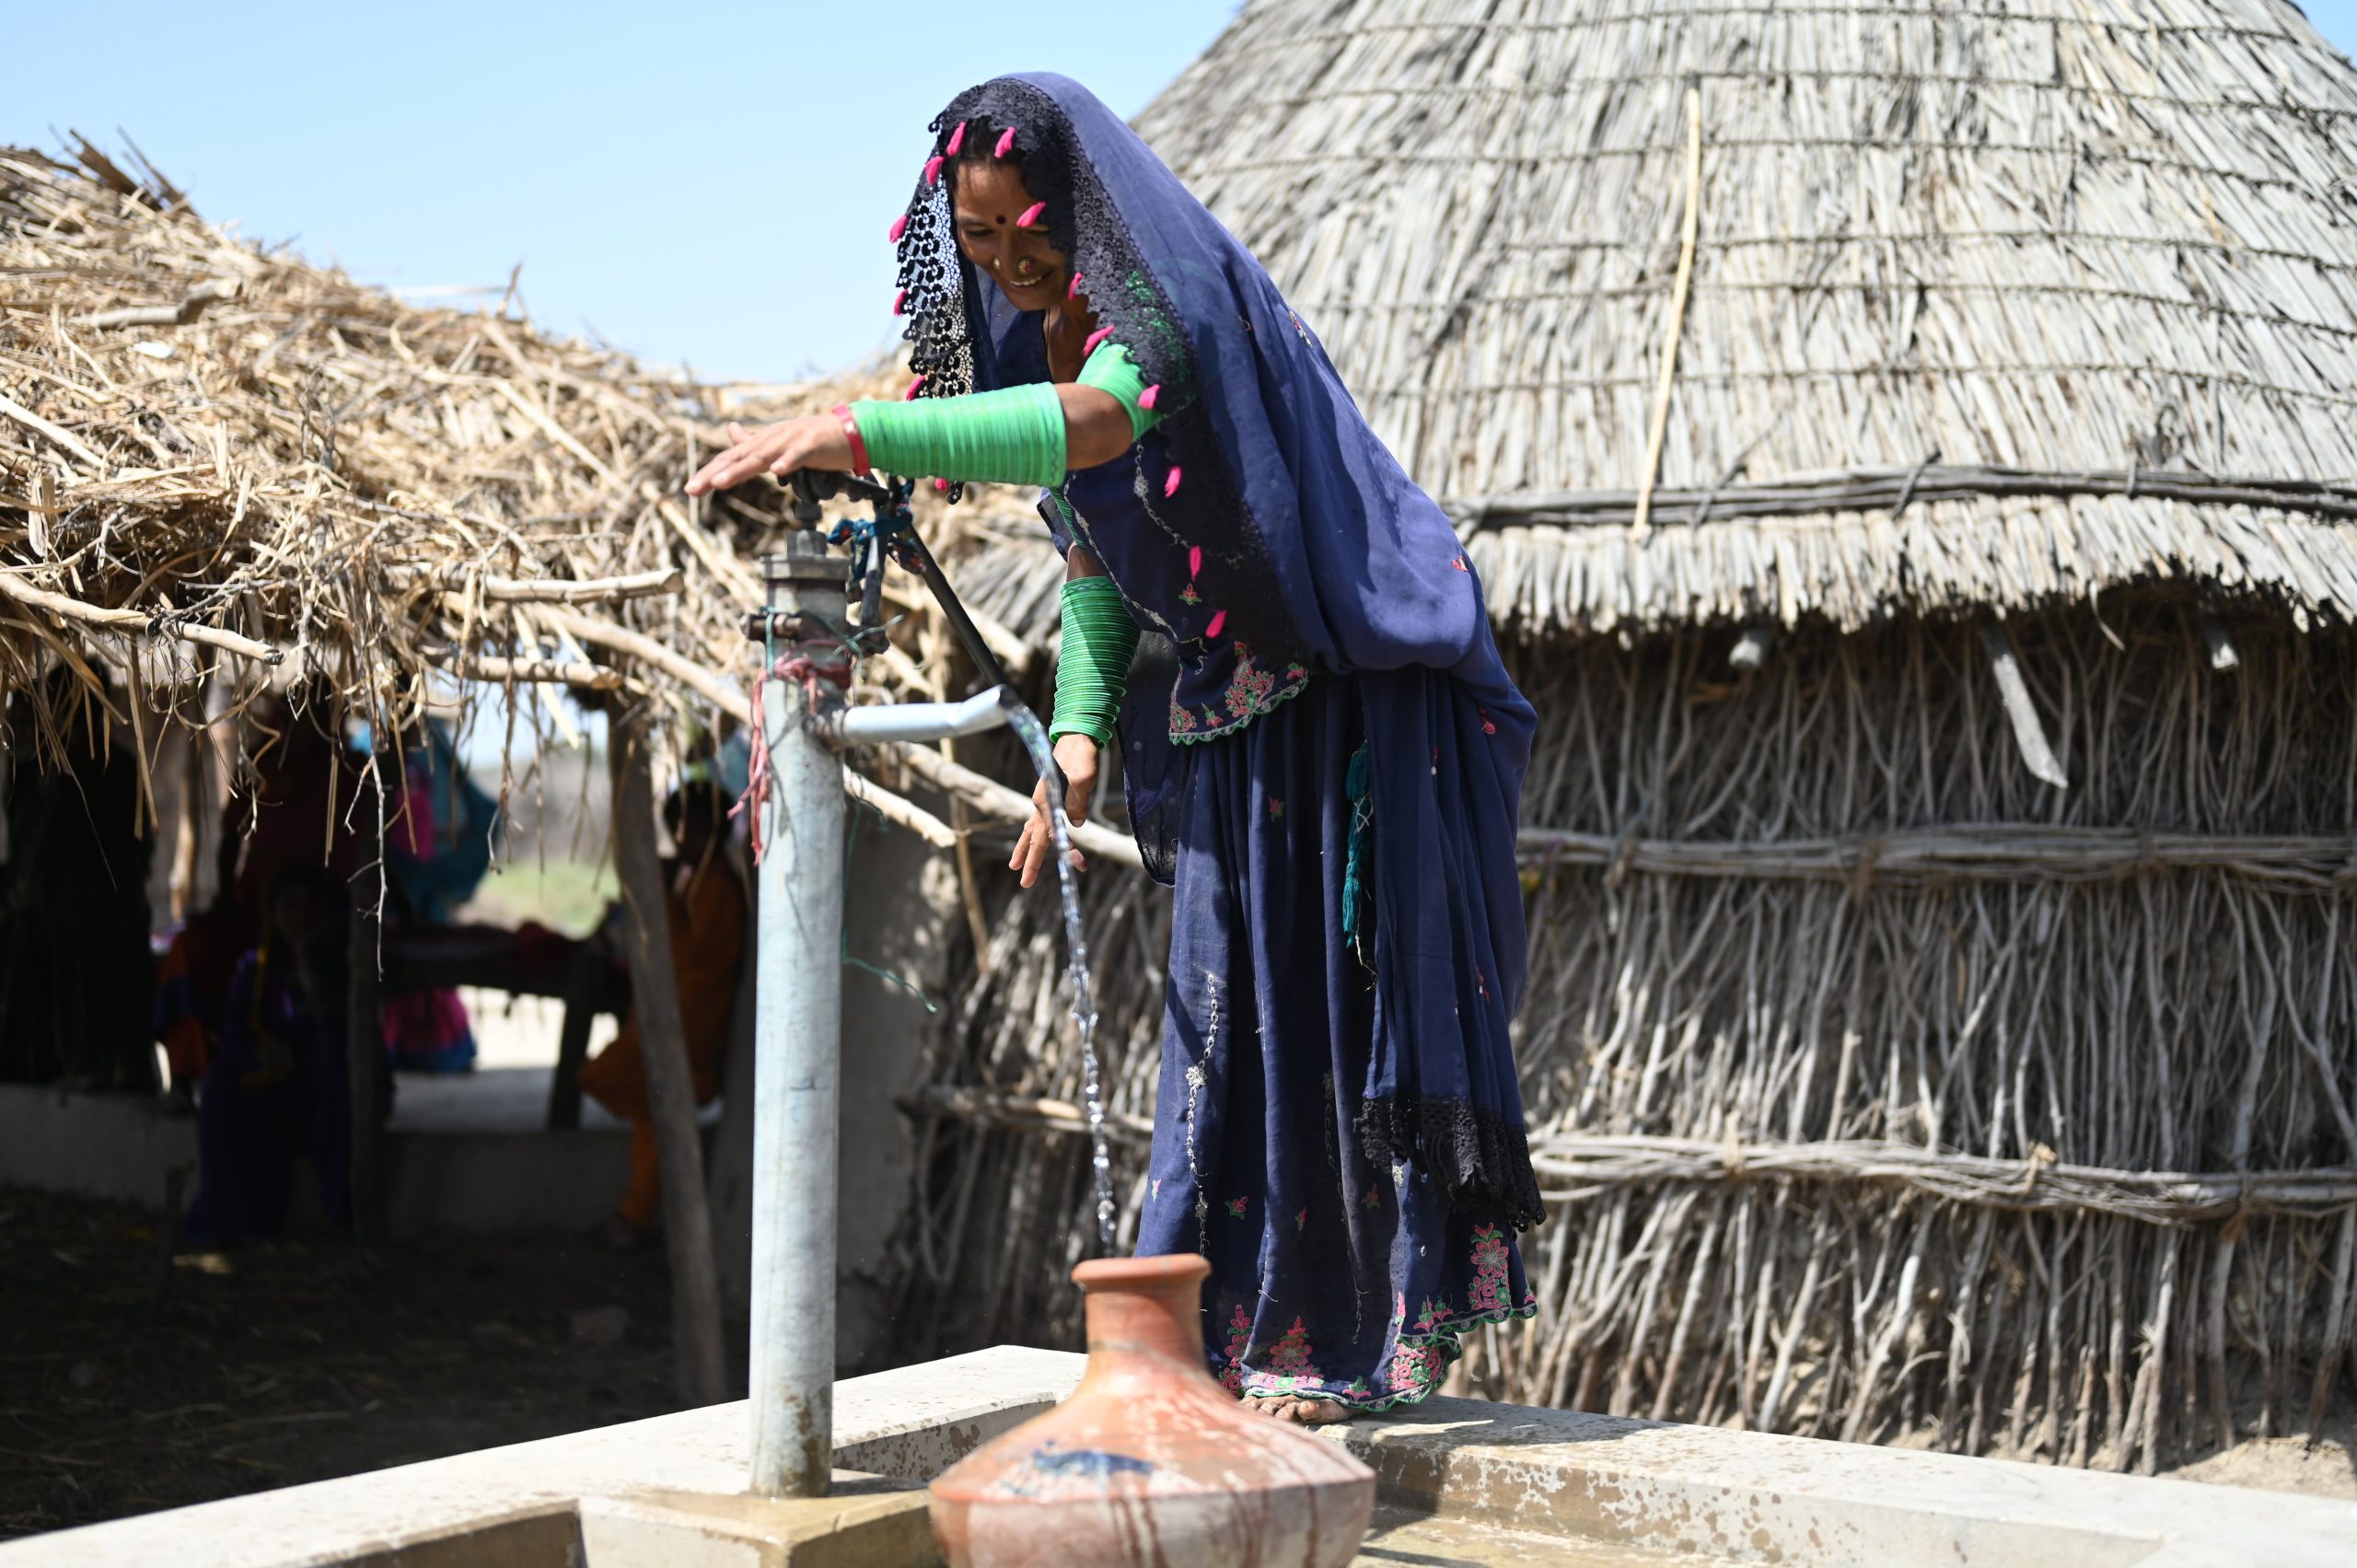 Pakistan: Samjho gets a hand pump in her village. Photo: Tooba Niazi/Oxfam